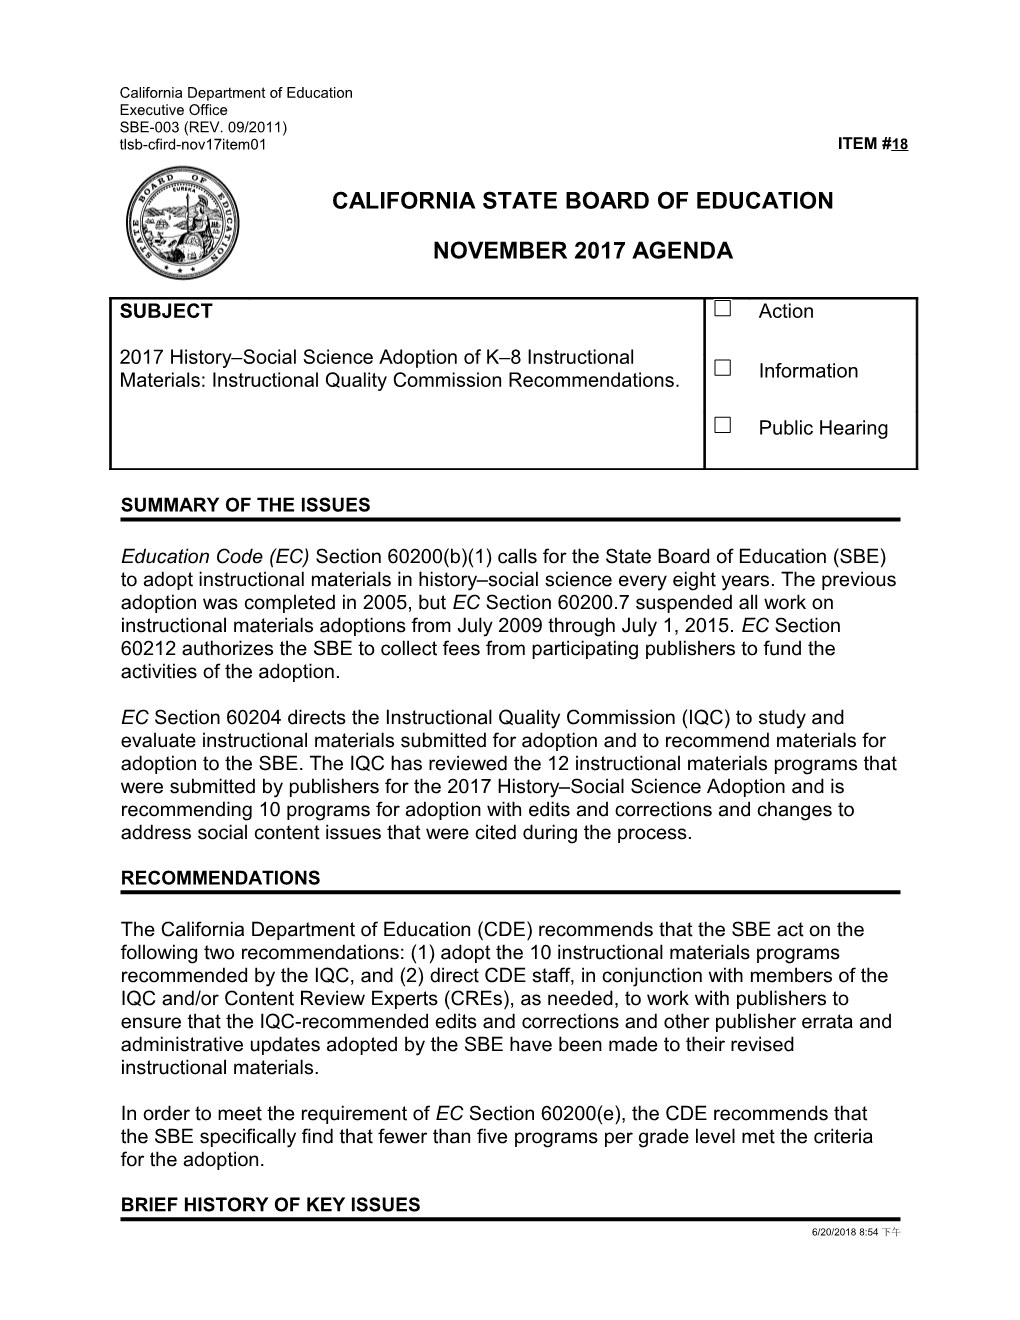 November 2017 Agenda Item 18 - Meeting Agendas (CA State Board of Education)